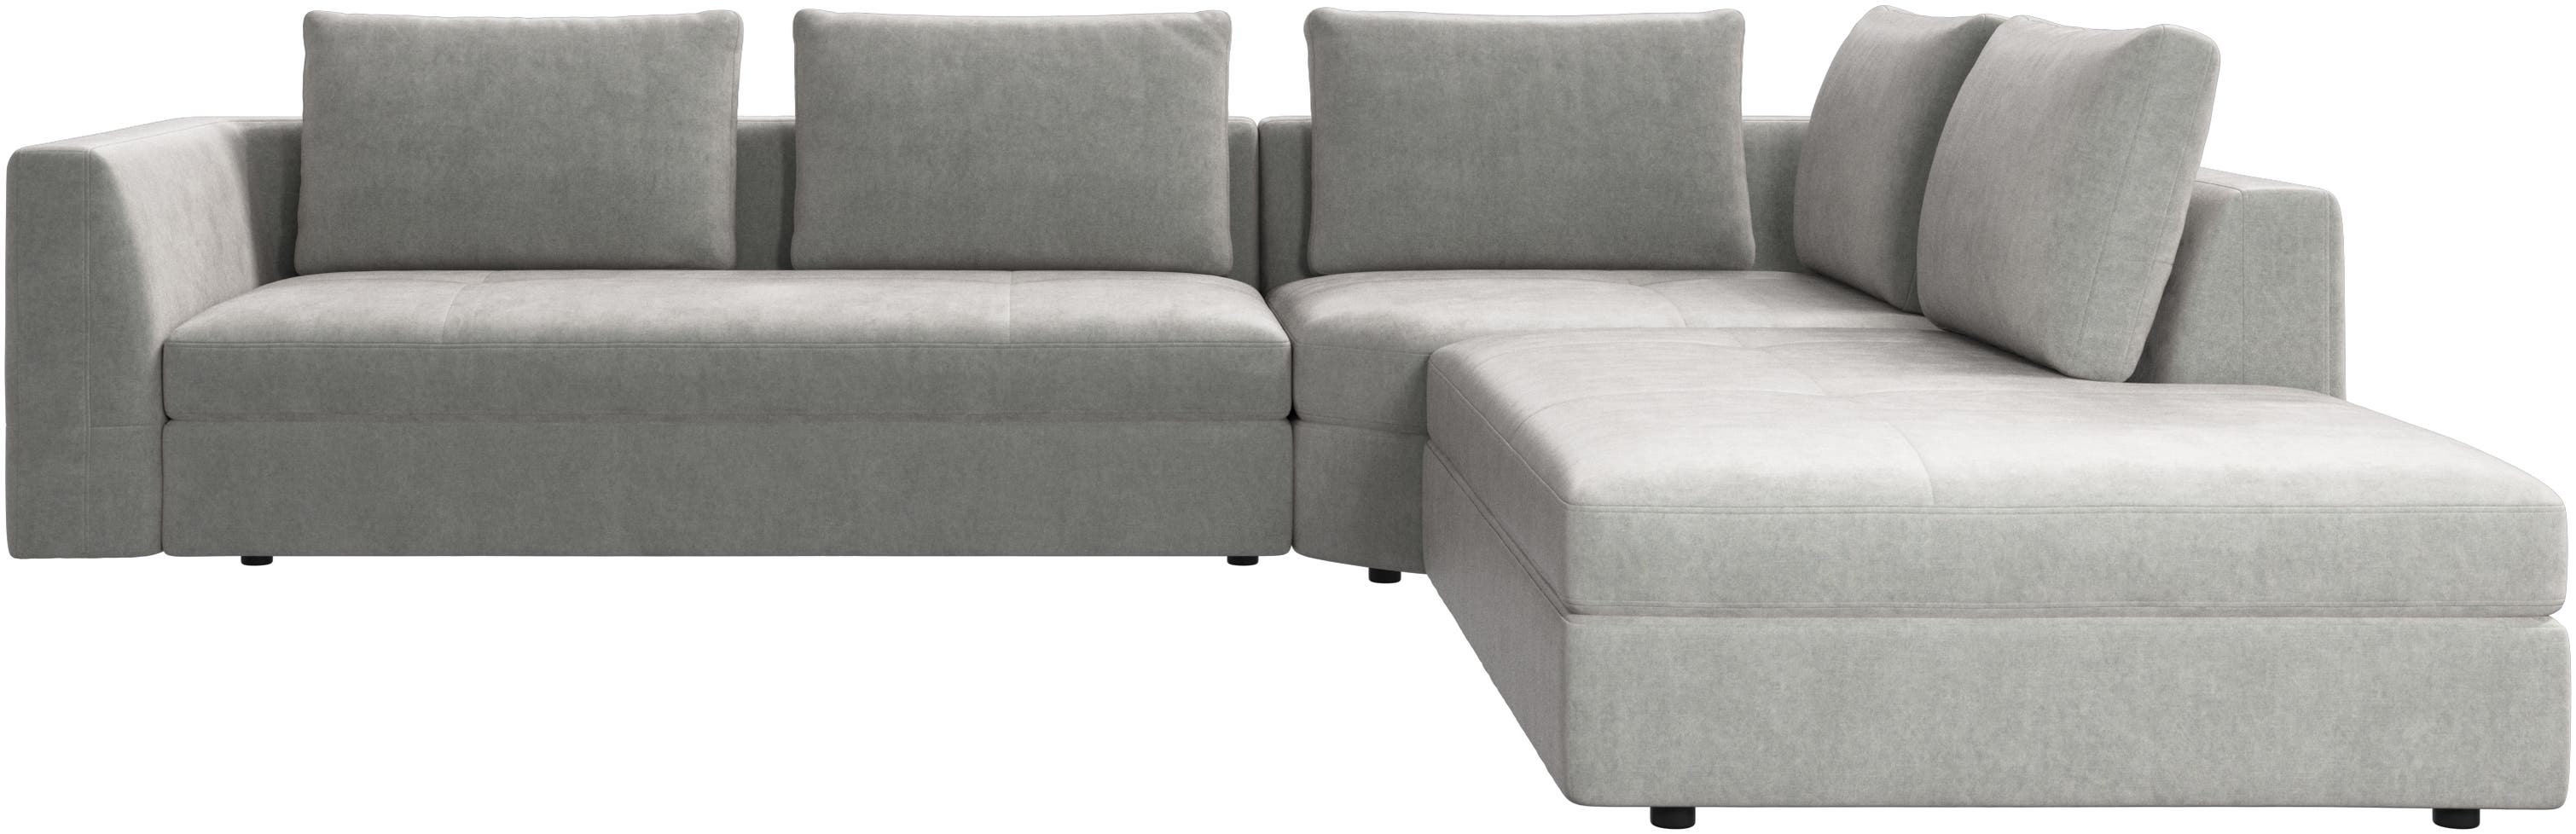 Bergamo corner sofa with lounging unit